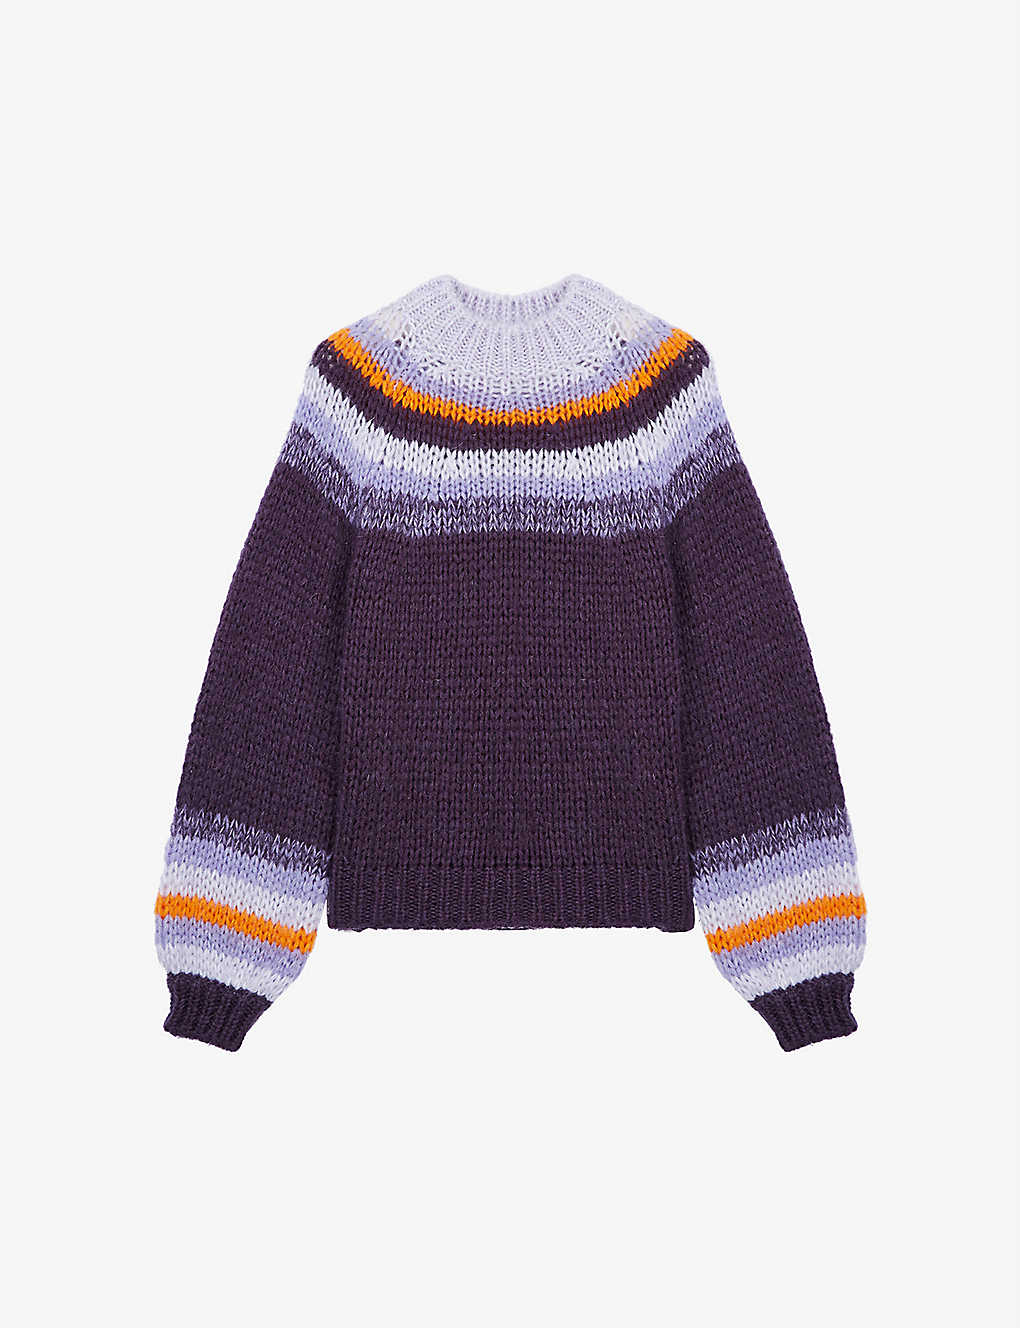 Meilleur striped jacquard knitted jumper(9462109)